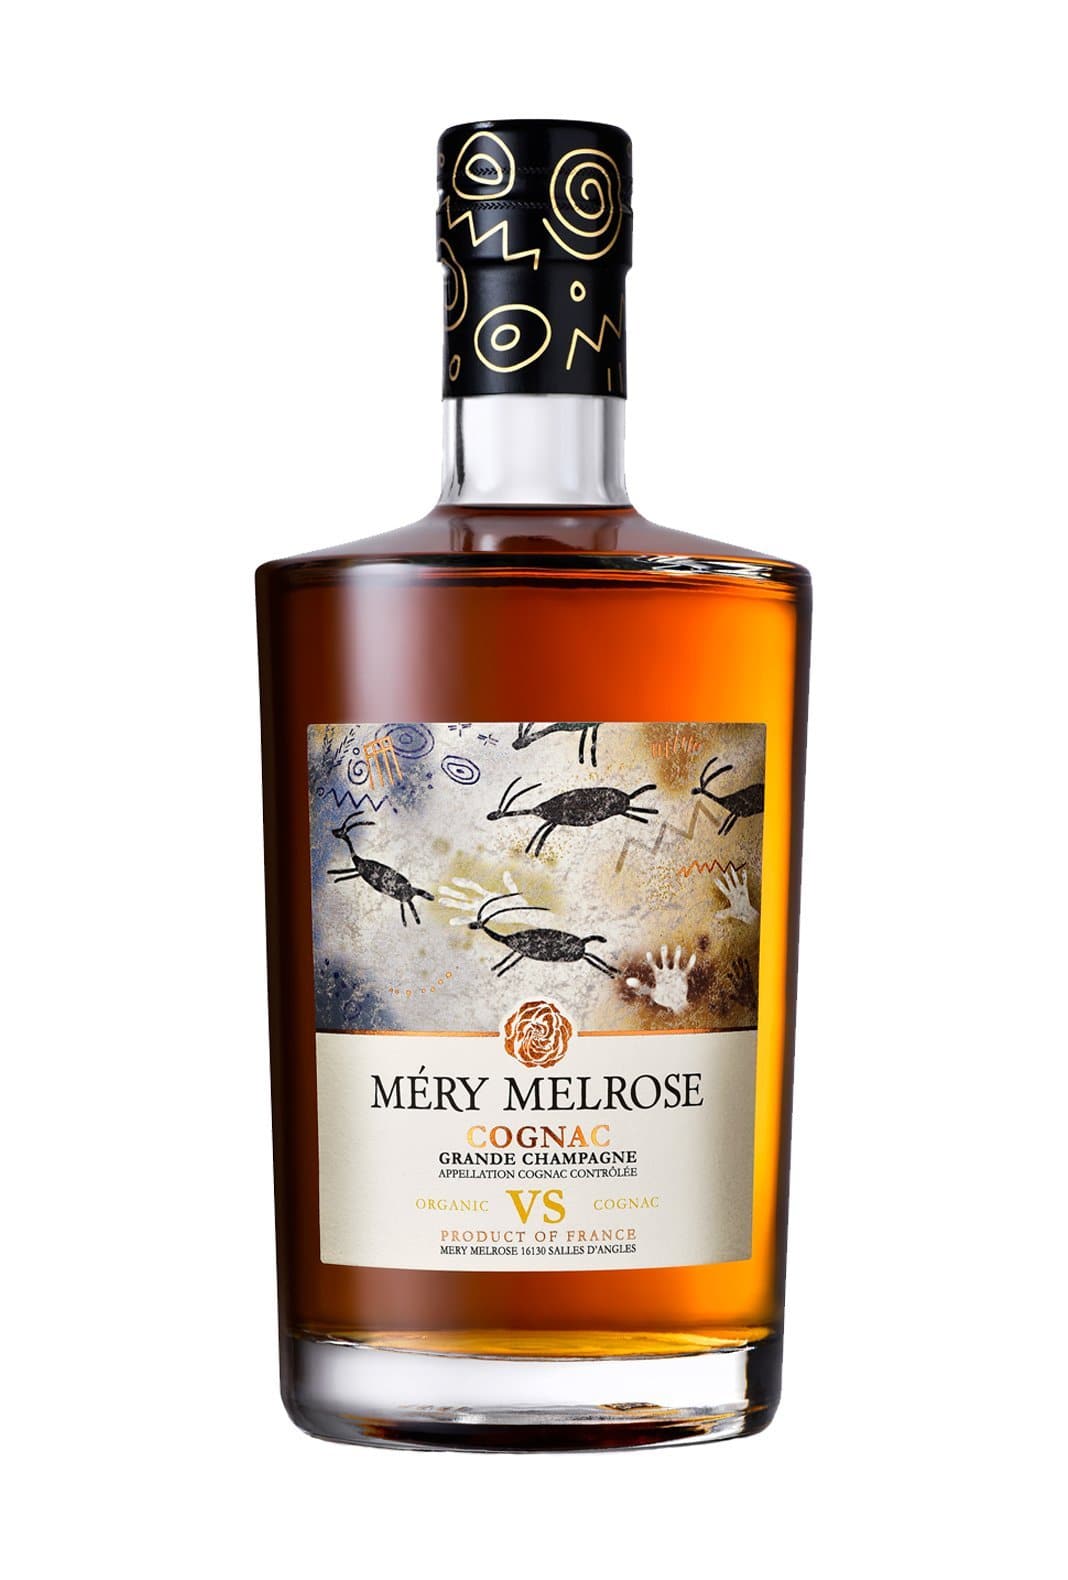 Mery Melrose VS Cognac Organic 40% 700ml | Brandy | Shop online at Spirits of France